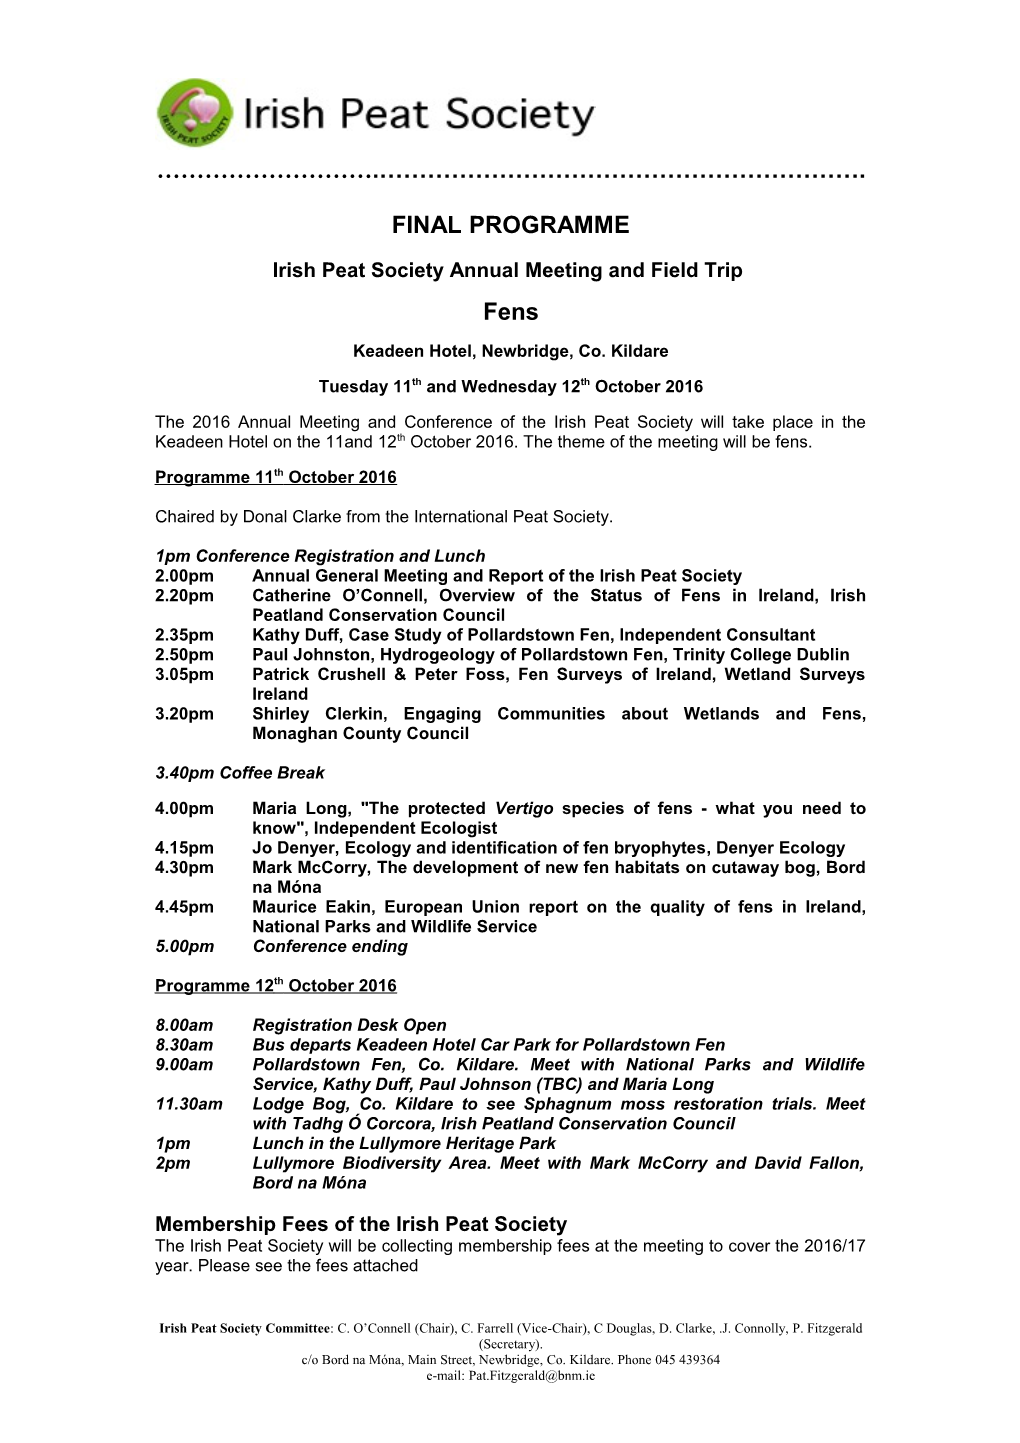 Irish Peat Society Annual Meeting and Field Trip